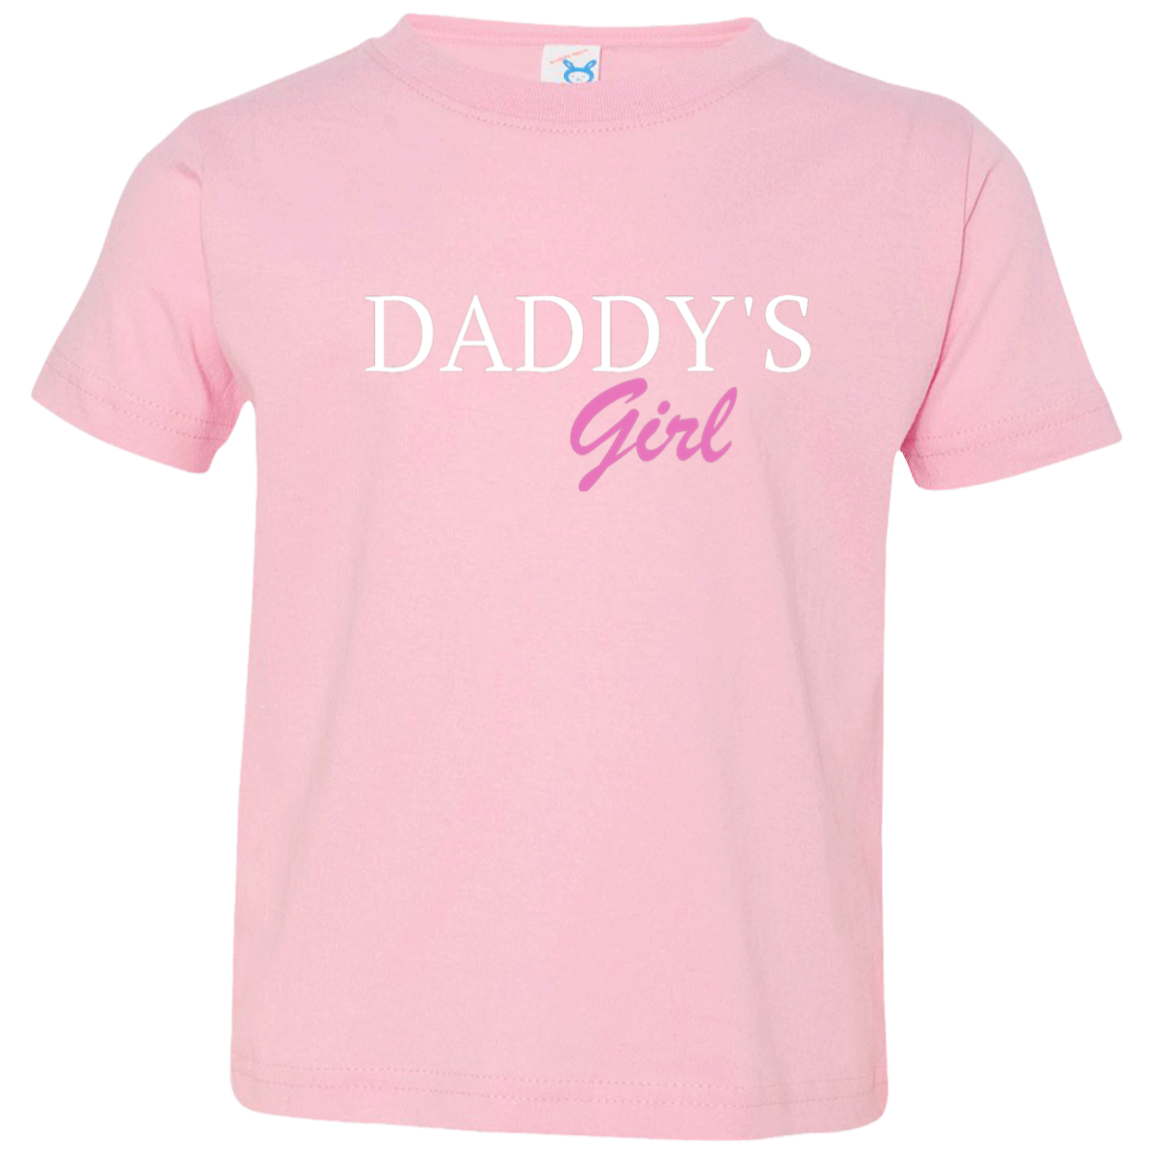 Toddler Jersey T-Shirt - "Daddy's Girl" Matching Shirt for Daughter